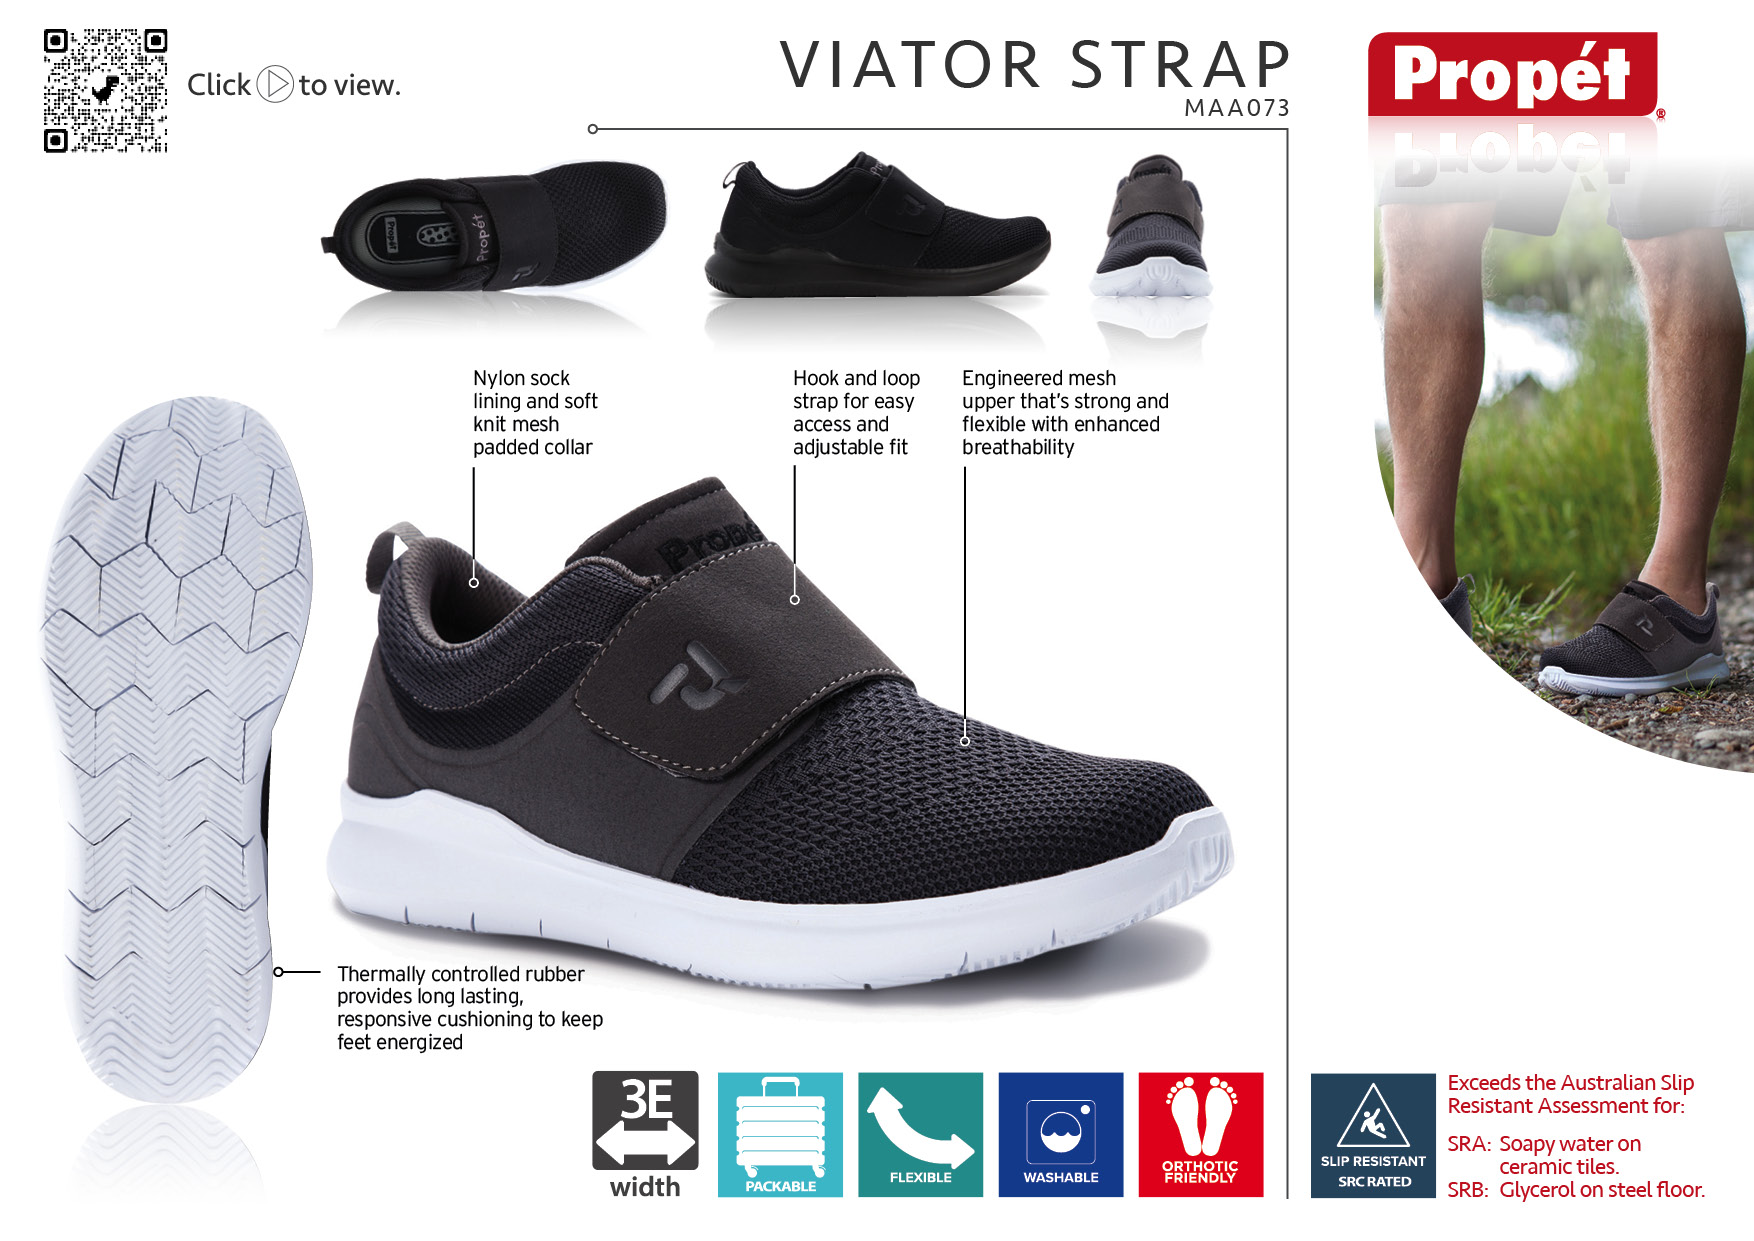 Viator Strap Men's AMAA073 Shoe Information Sheet